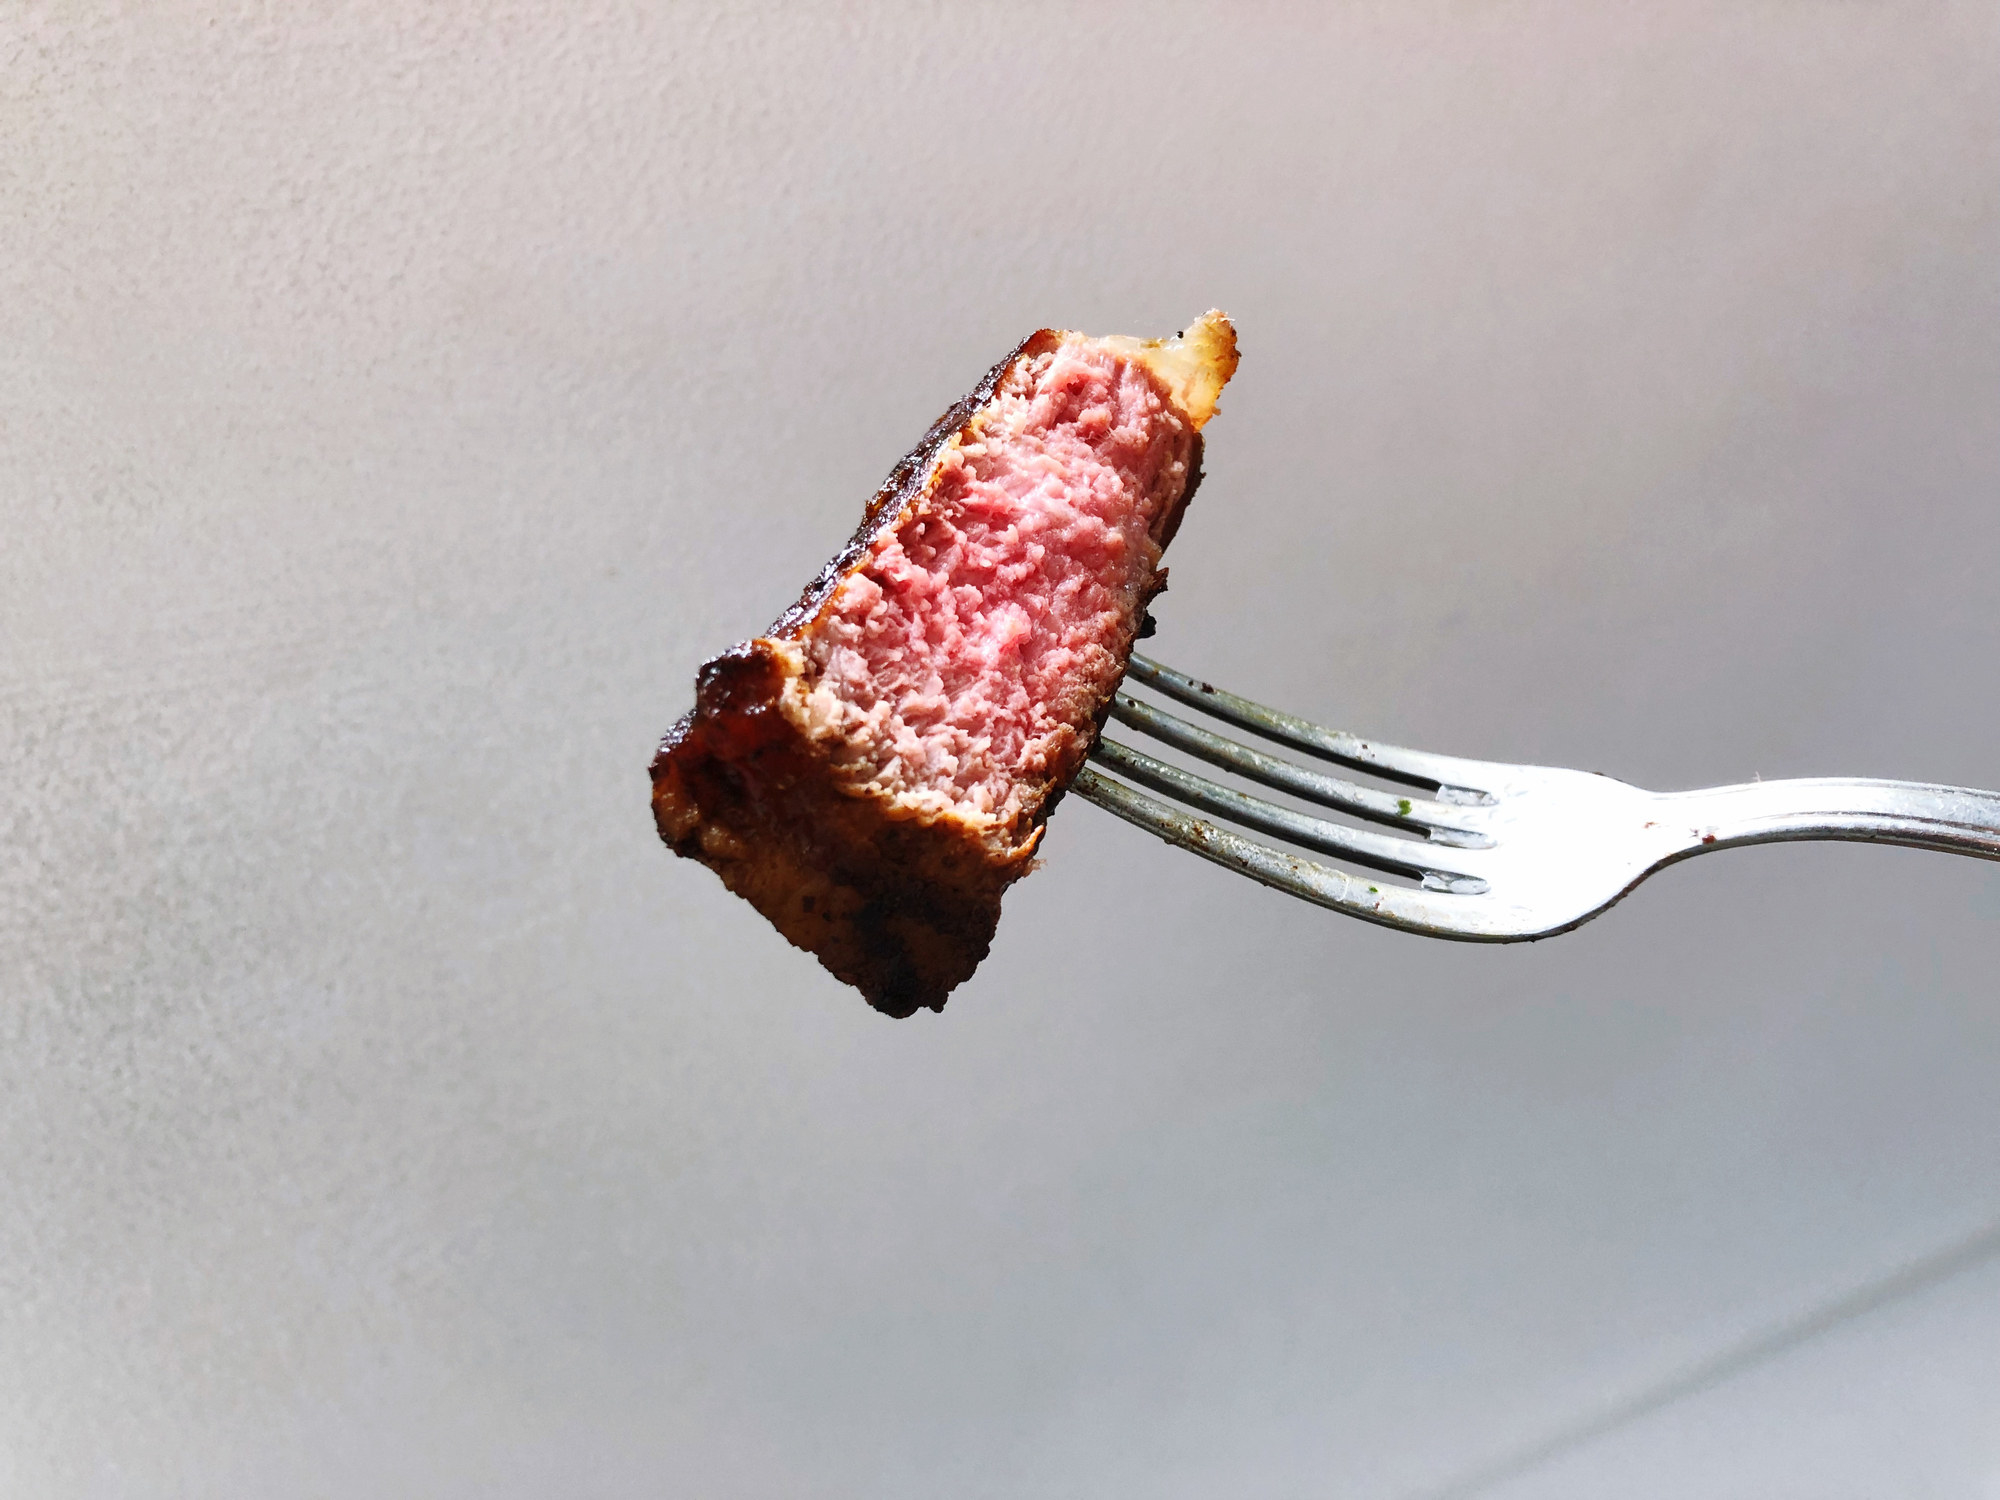 A piece of steak on a fork.